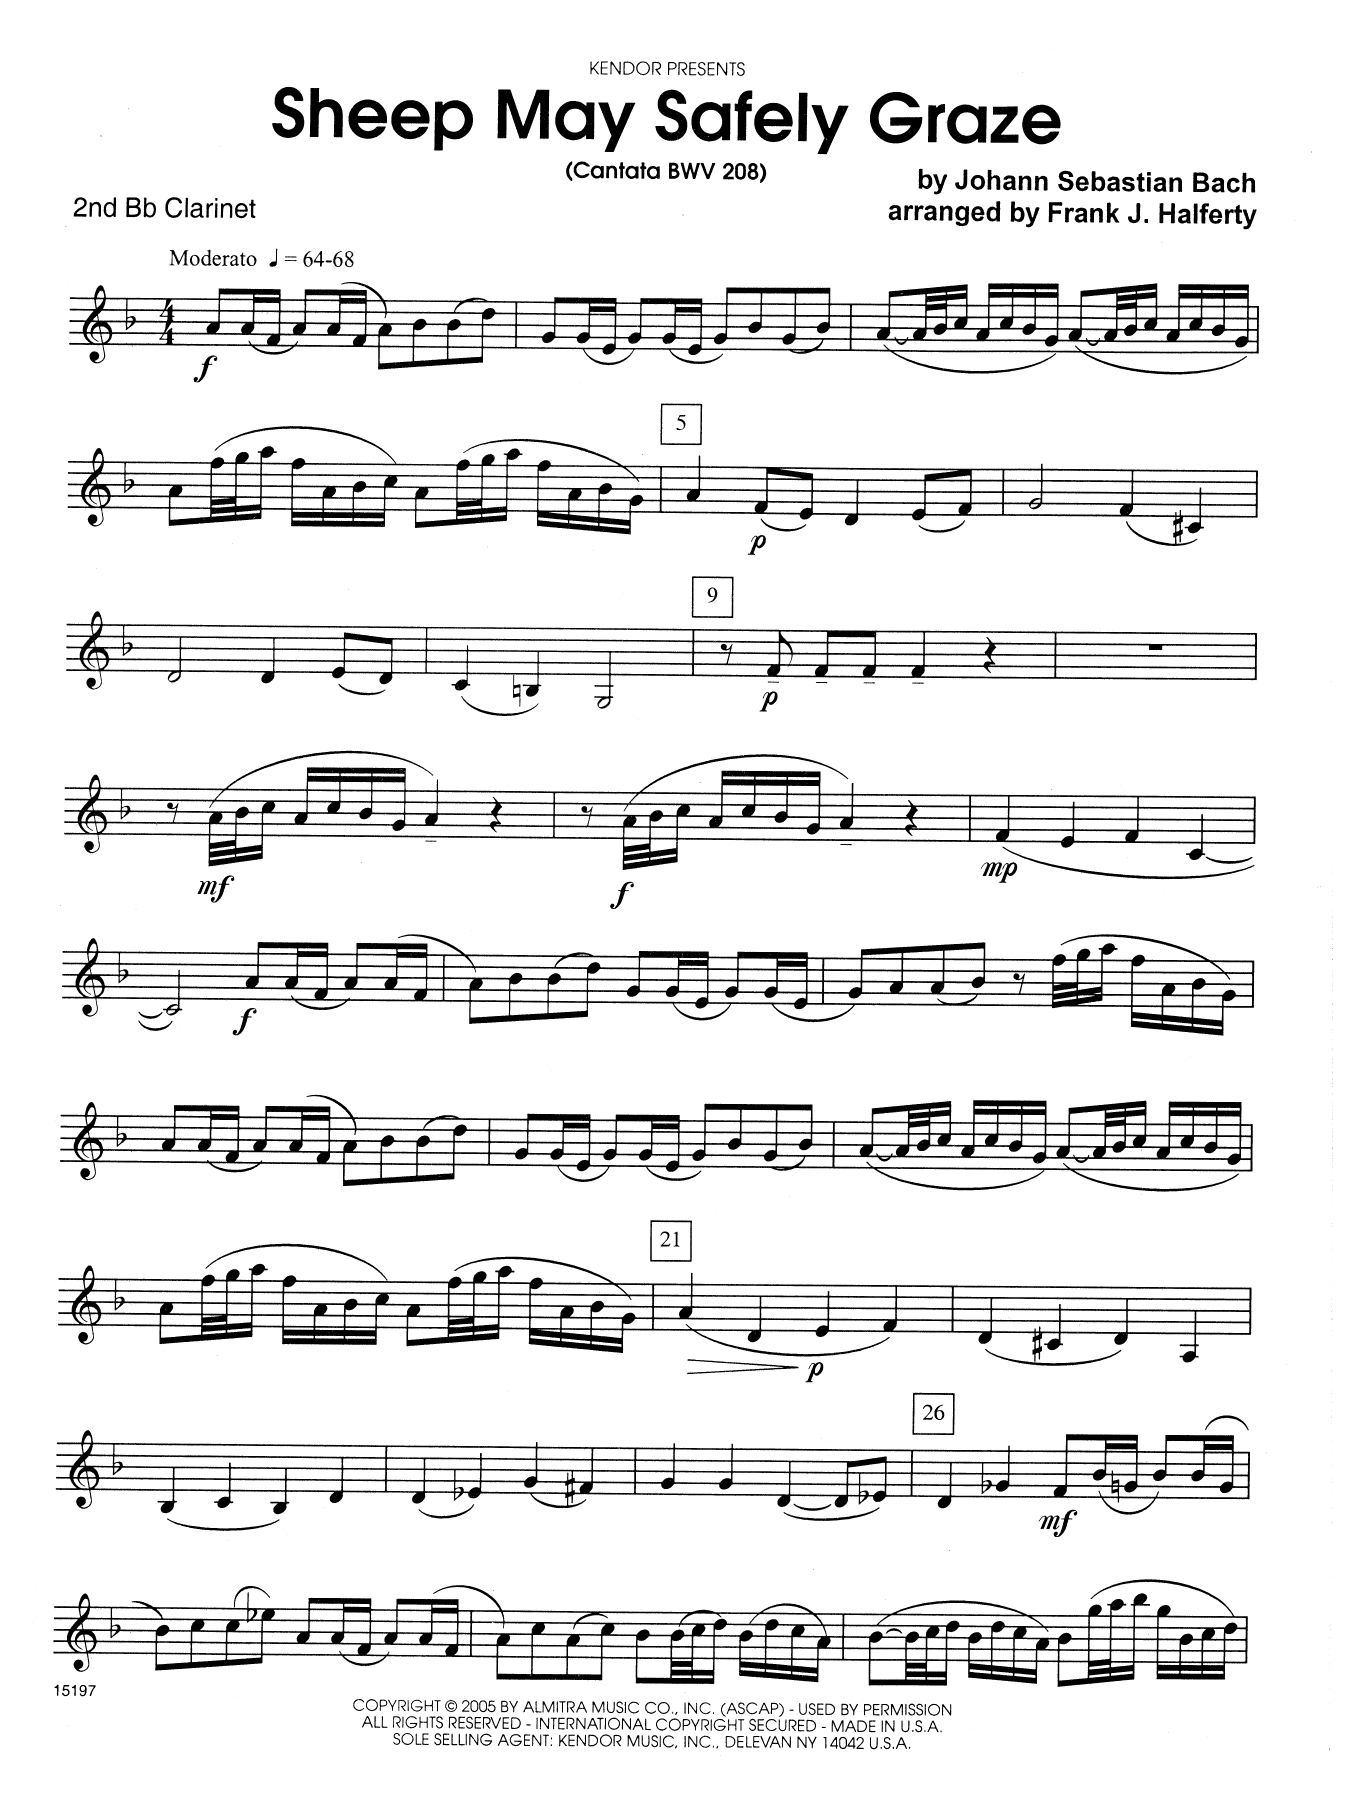 Download Frank J. Halferty Sheep May Safely Graze (Cantata BWV 208 Sheet Music